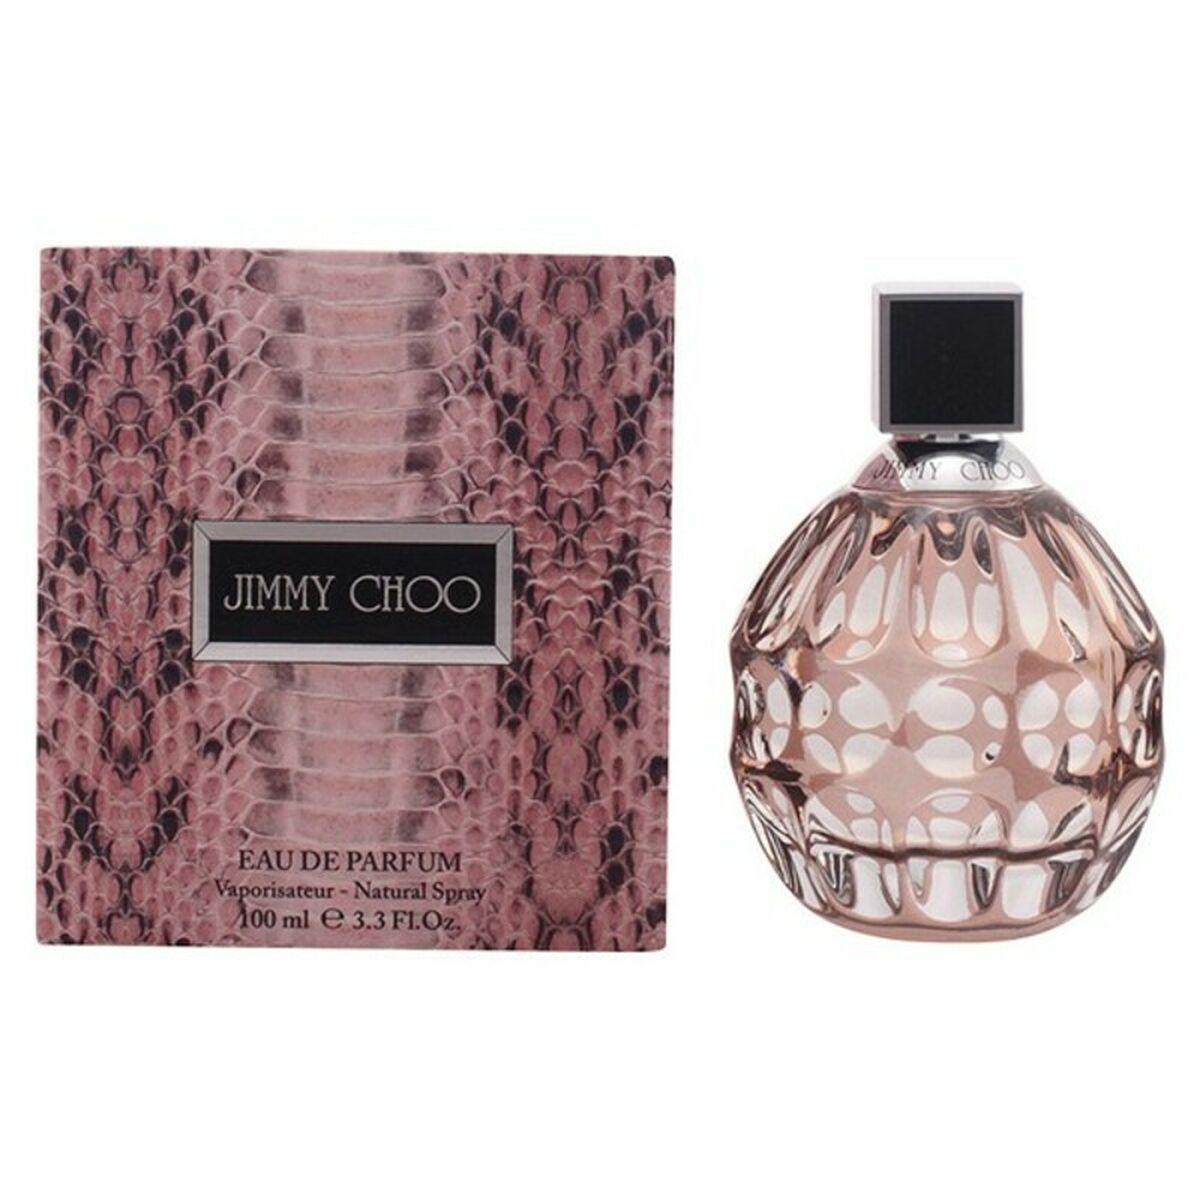 Se Jimmy Choo - Woman Eau de Parfum - 100 ml - Edp hos Boligcenter.dk